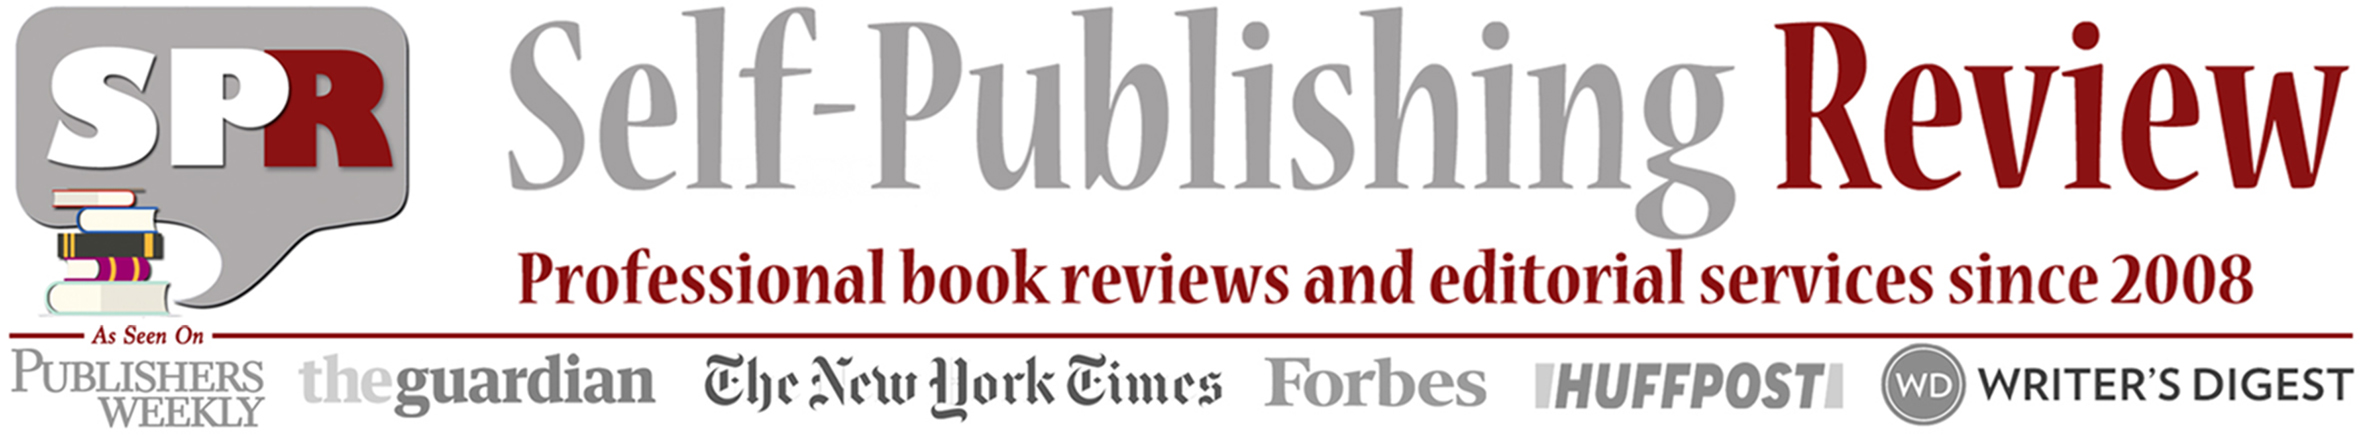 Self-Publishing Review Logo